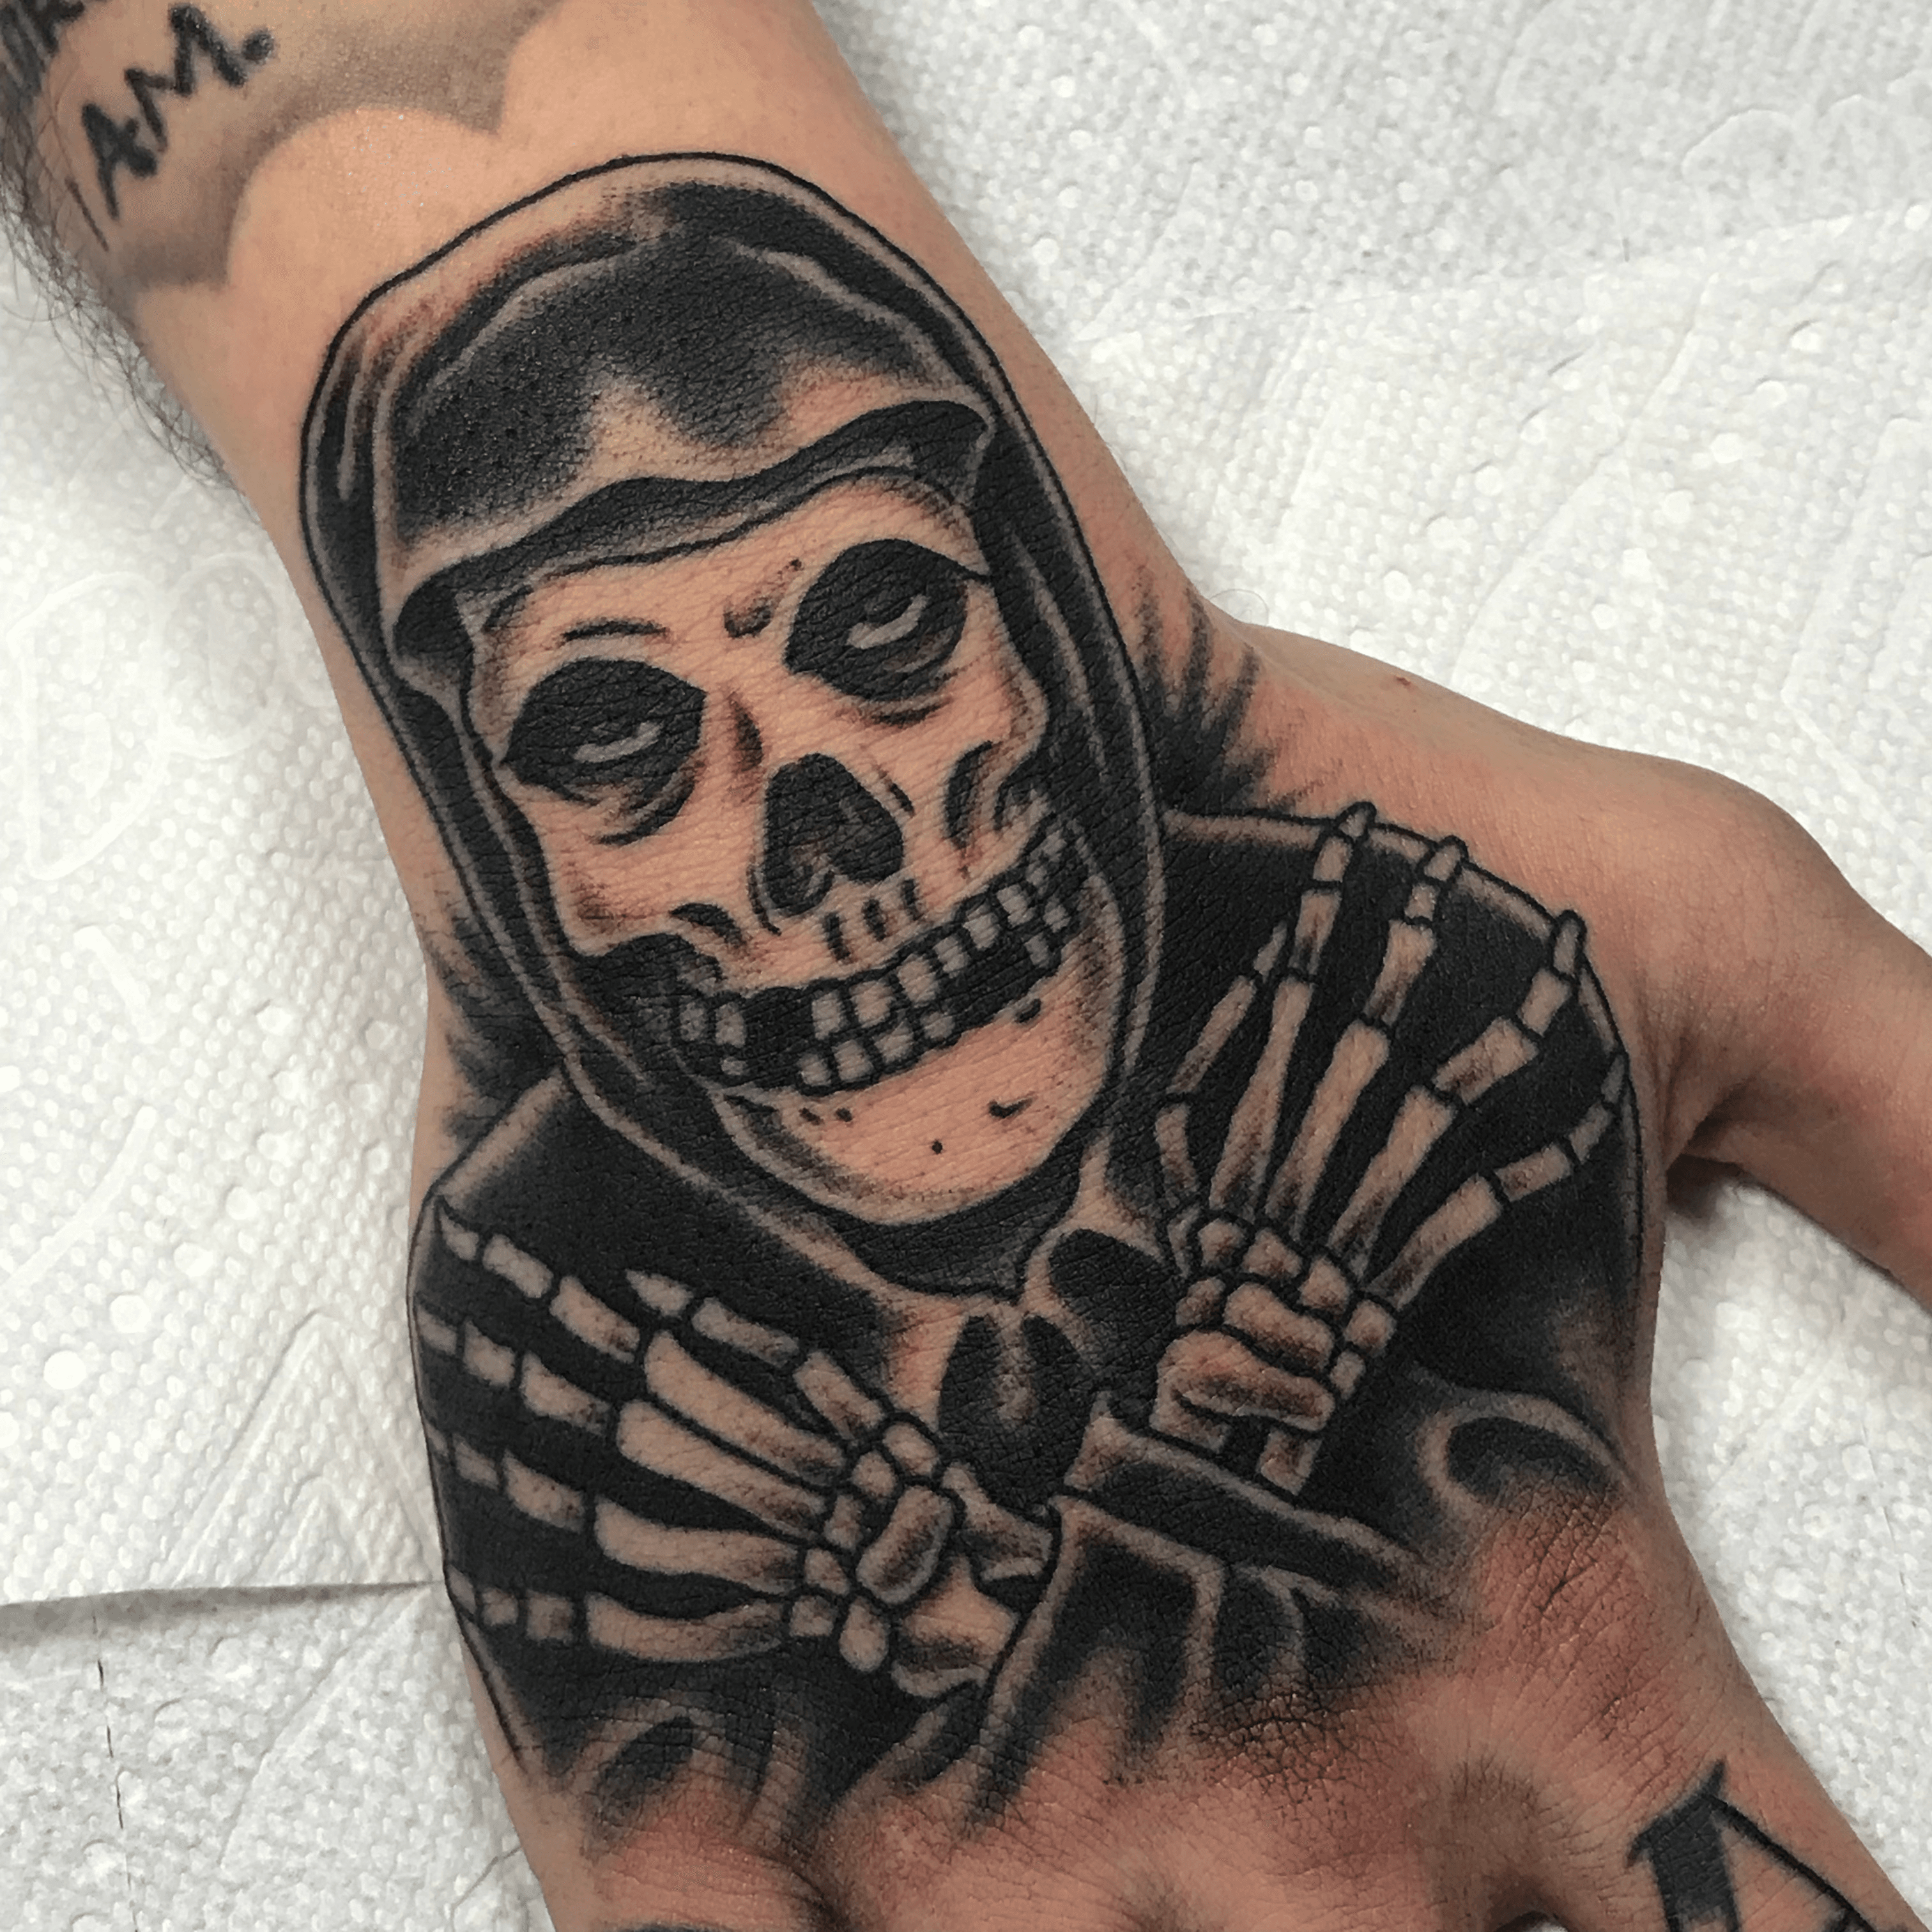 Bandana Bandit Skull Temporary Tattoo Sticker  OhMyTat